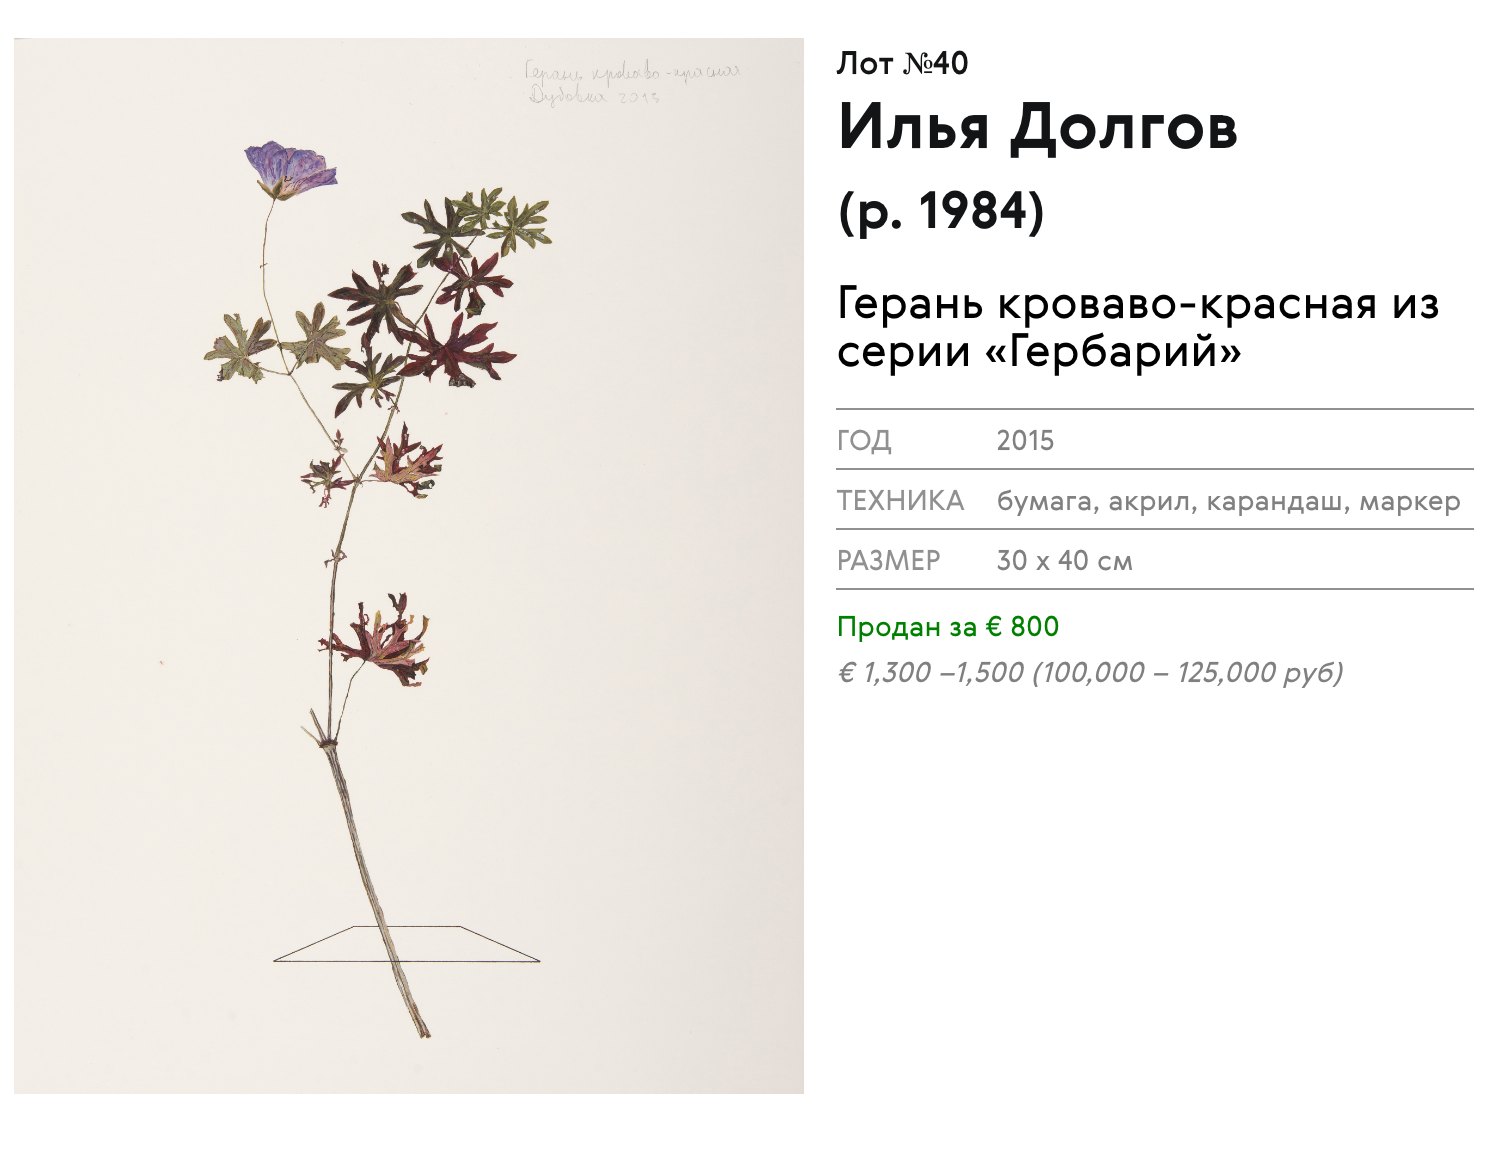 Серия «Гербарий» продаётся в московский галерее XL, цена за 1 лист — 1100 €